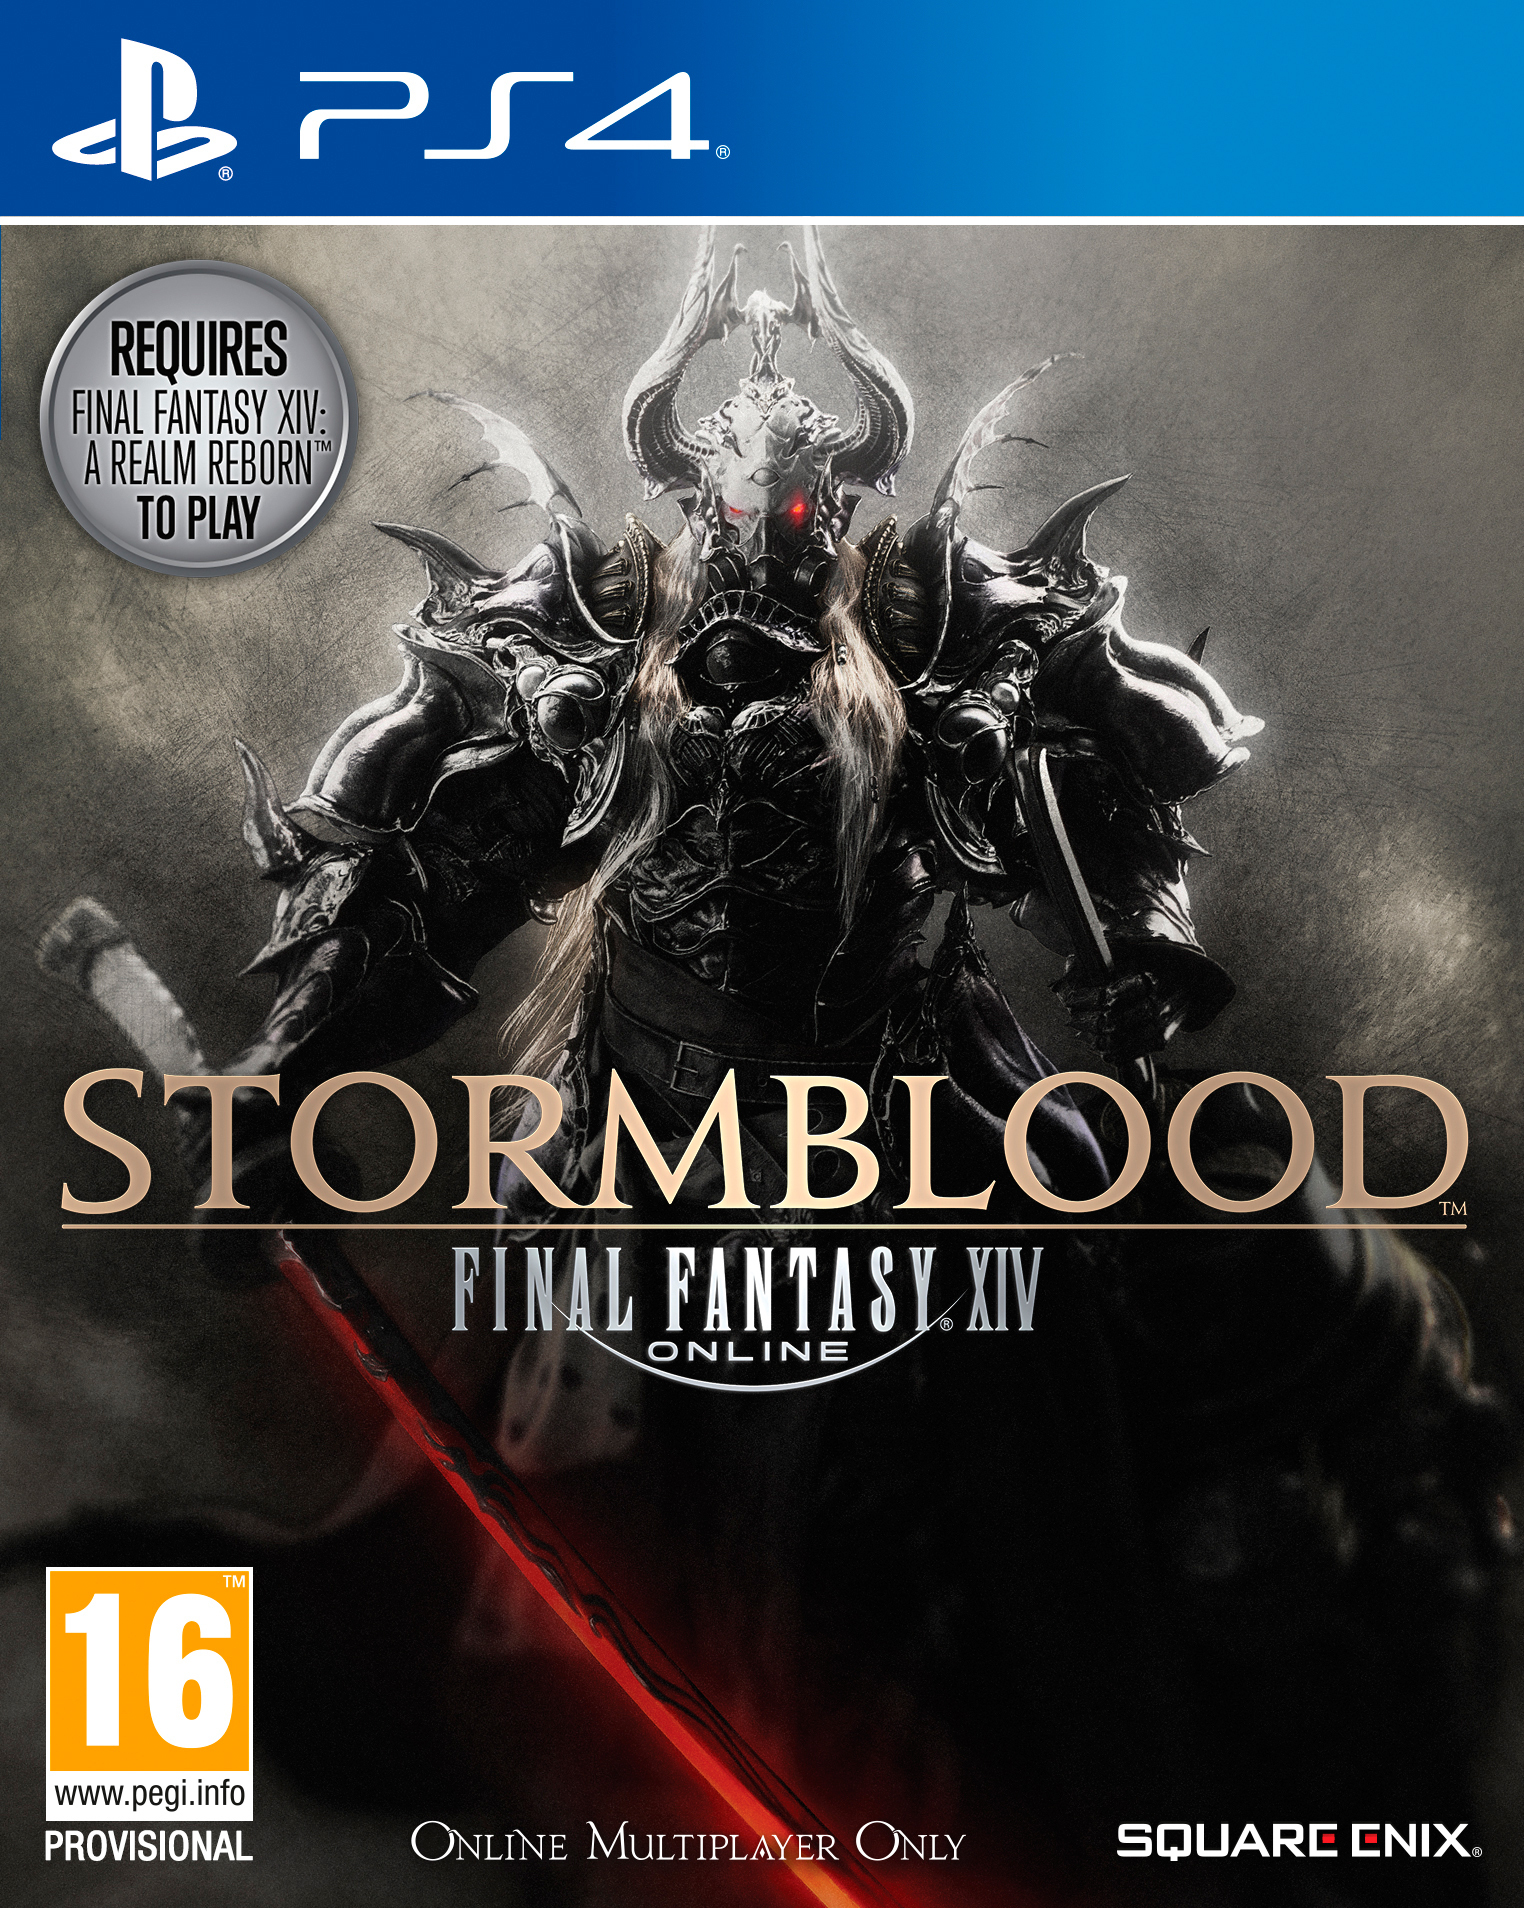 Final Fantasy XIV (14) Online – Stormblood